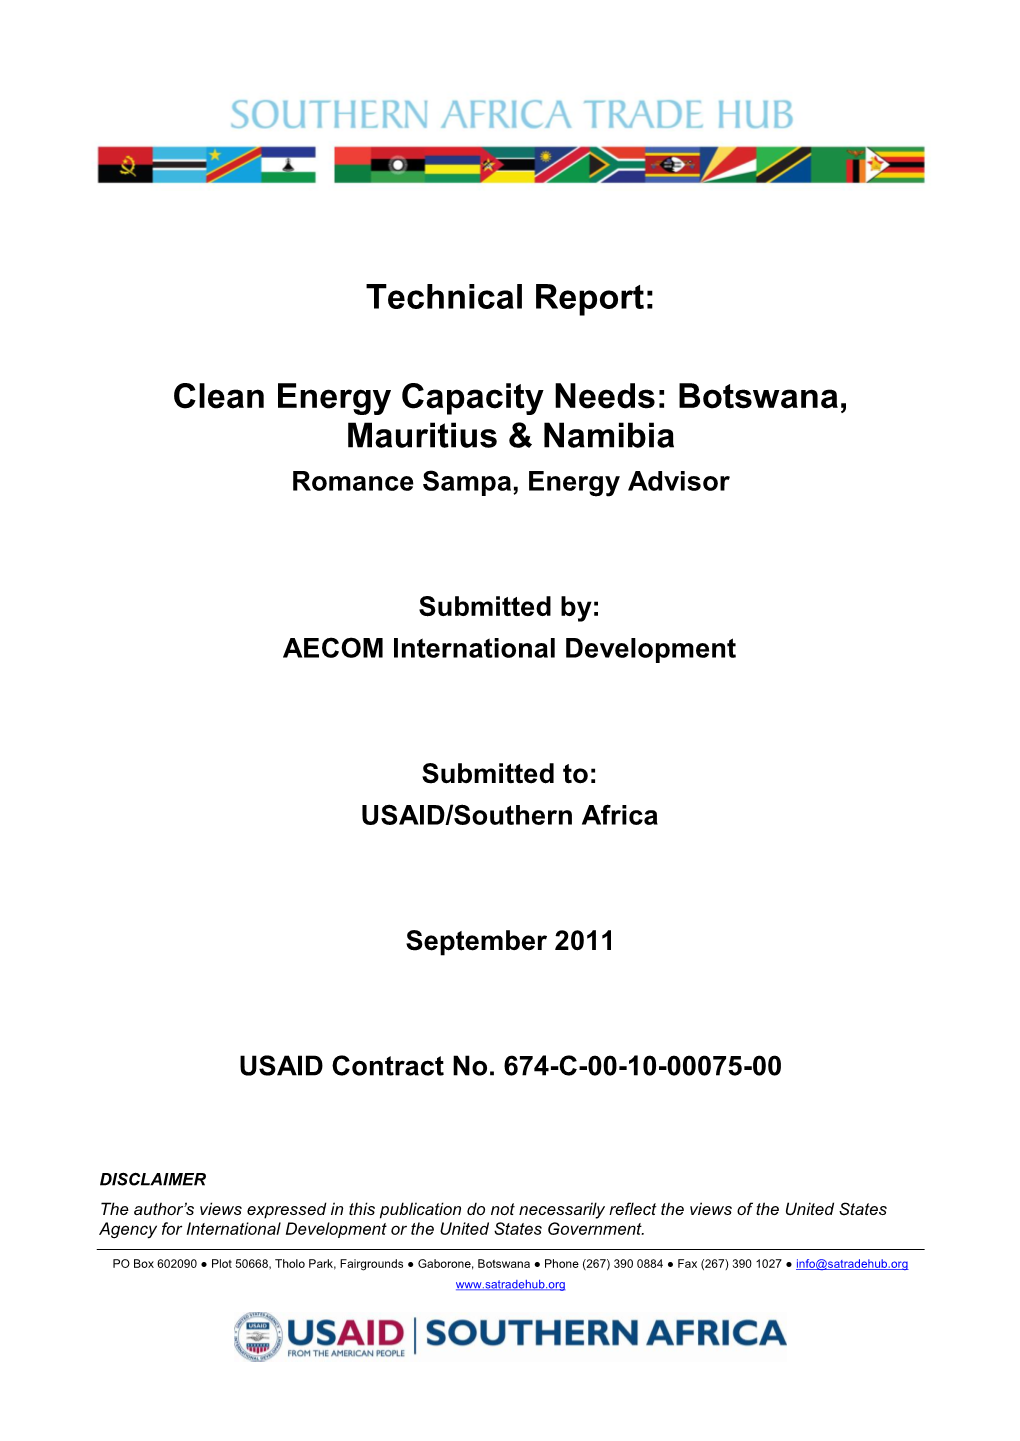 Clean Energy Capacity Needs: Botswana, Mauritius & Namibia